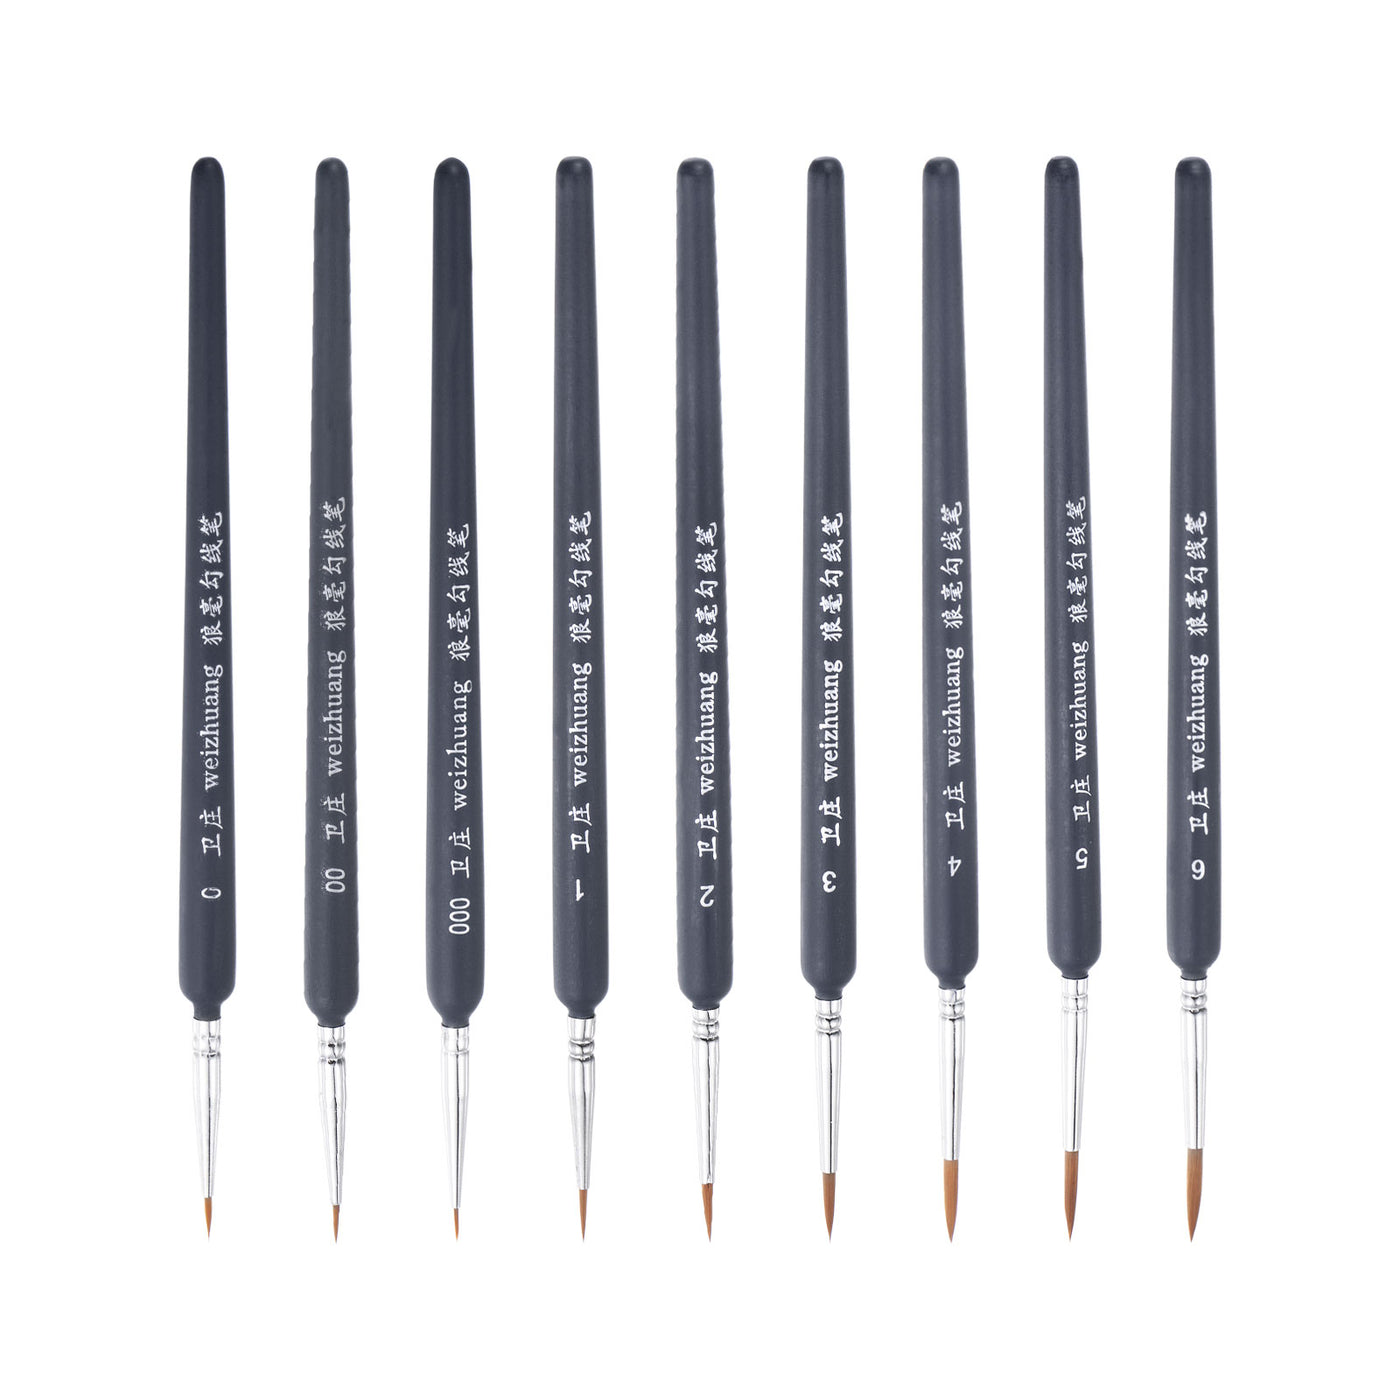 Uxcell Uxcell Detailing Paint Brush Set Pointed Bristle Blue Wood Handle 1 Set (9Pcs)